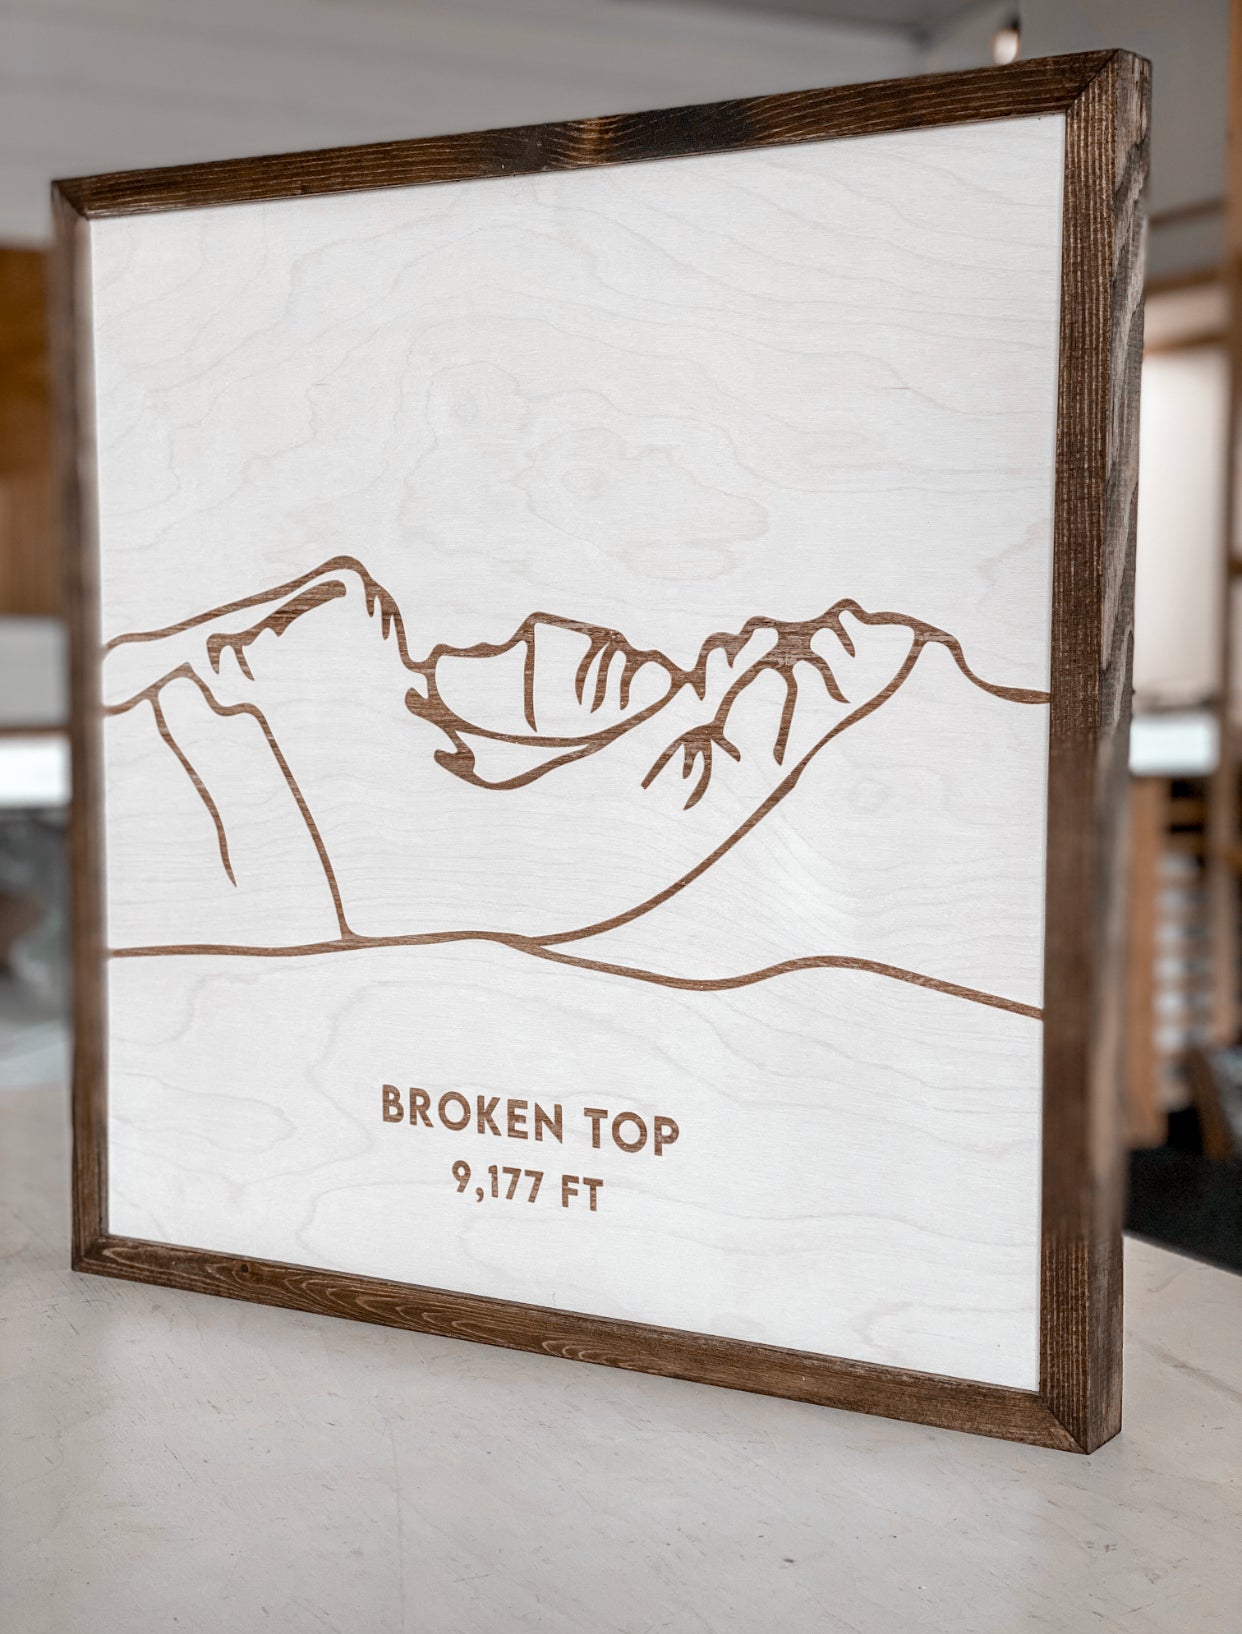 Broken Top Hand Sketched Engraved Wooden Artwork